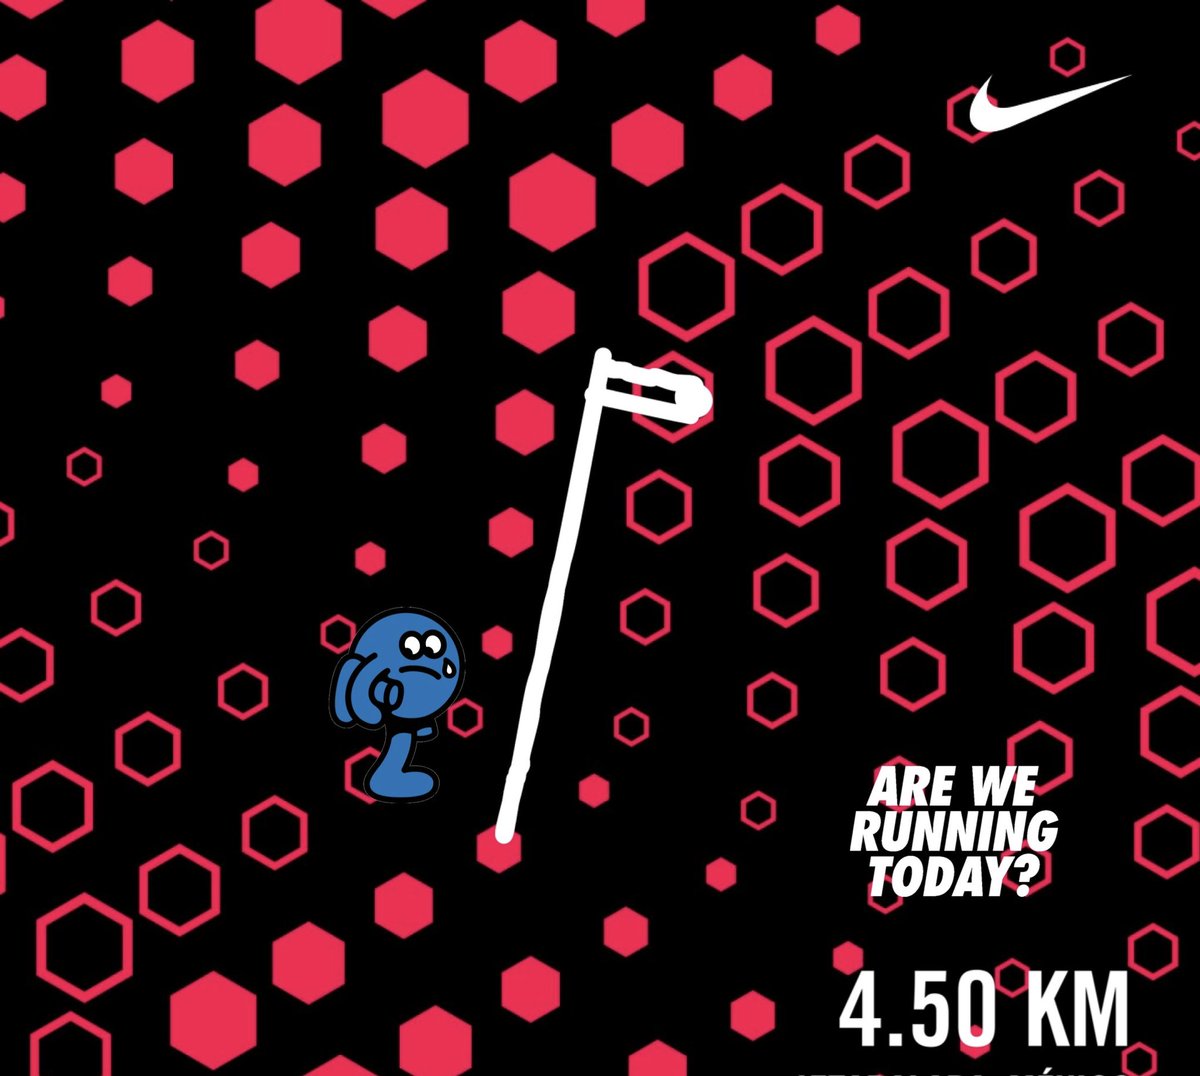 Corrí 4.50 kms Nike⁠ Run Club 🇲🇽 #JustDoIt #nikeplus #nikerunclub #nikerunning #applewatch #iwatch #osojcrg #desayunandokms #nrc  #everyrunhasapurpose #run #running #runner #totalrunning #yoelegicorrer #instarunners #inspirarunning 
#everydamnmile #consejerosmx